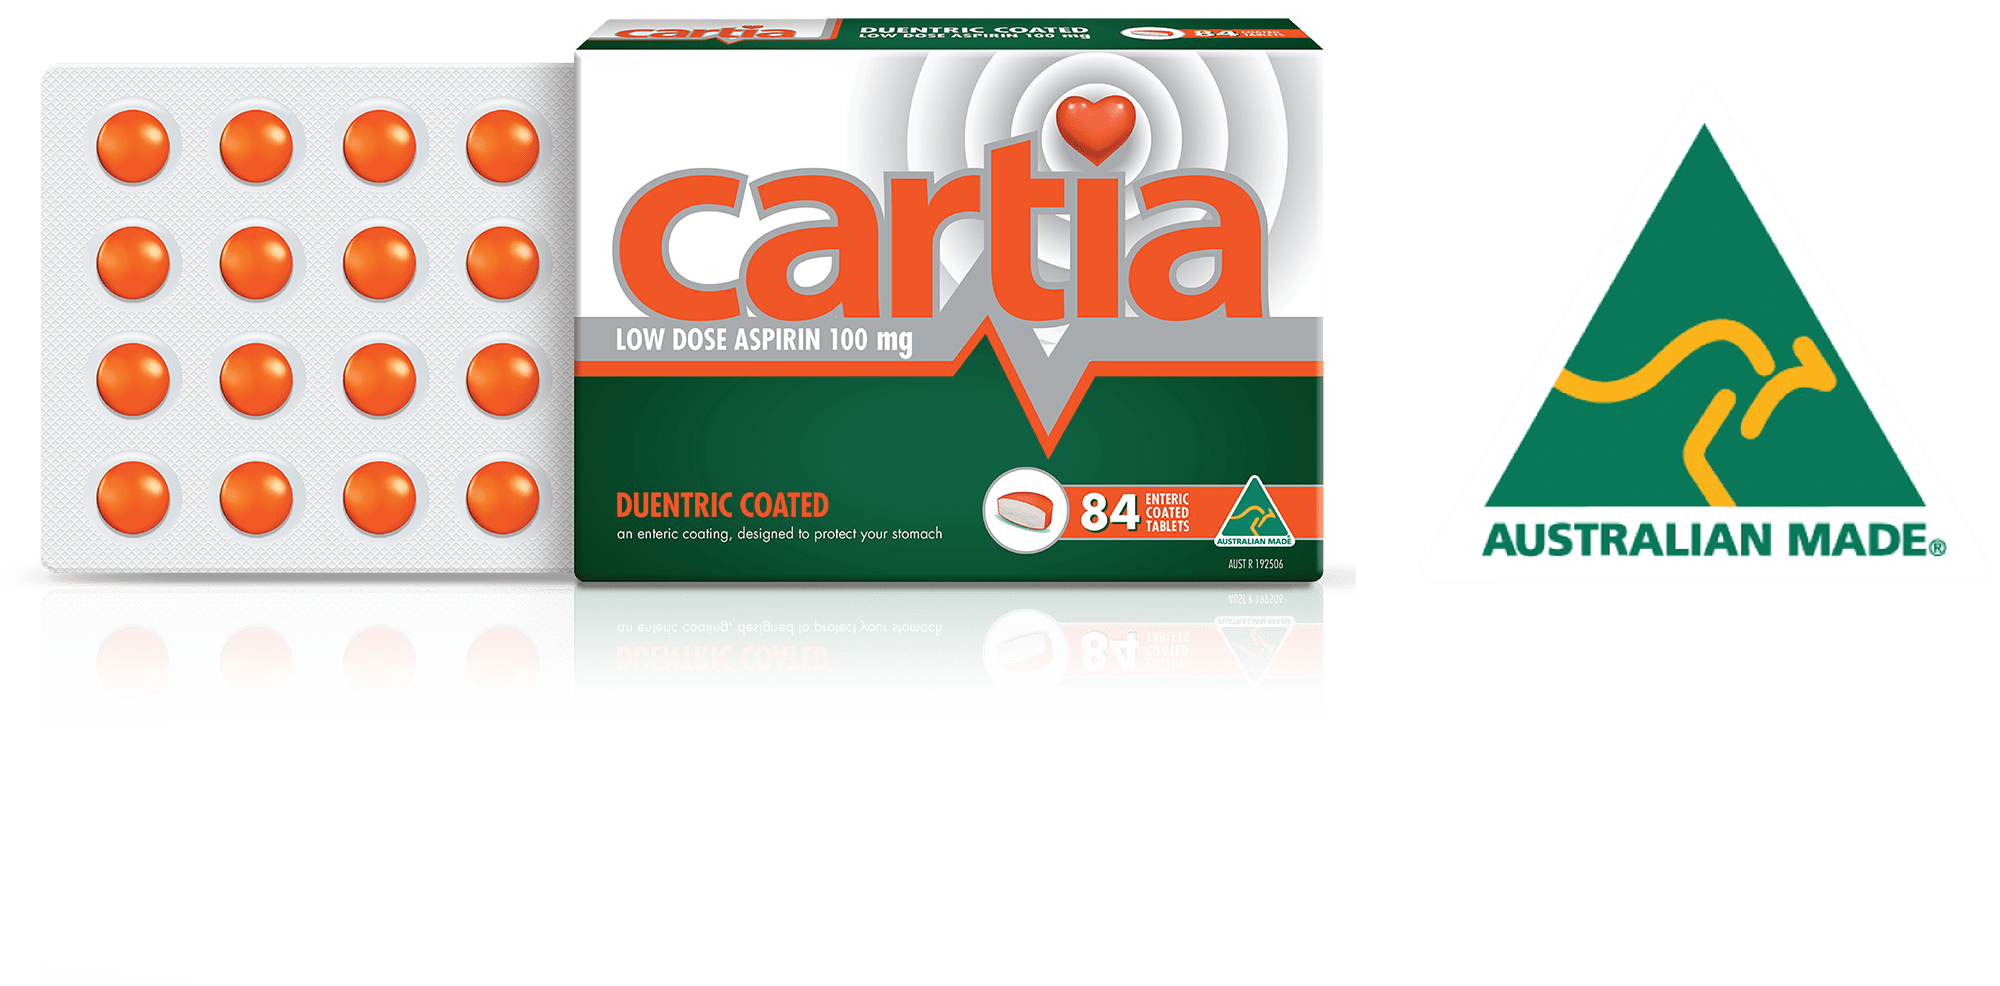 Duentric coated, low-dose aspirin Cartia tablet pack, Cartia box, and Australia Made logo Logo